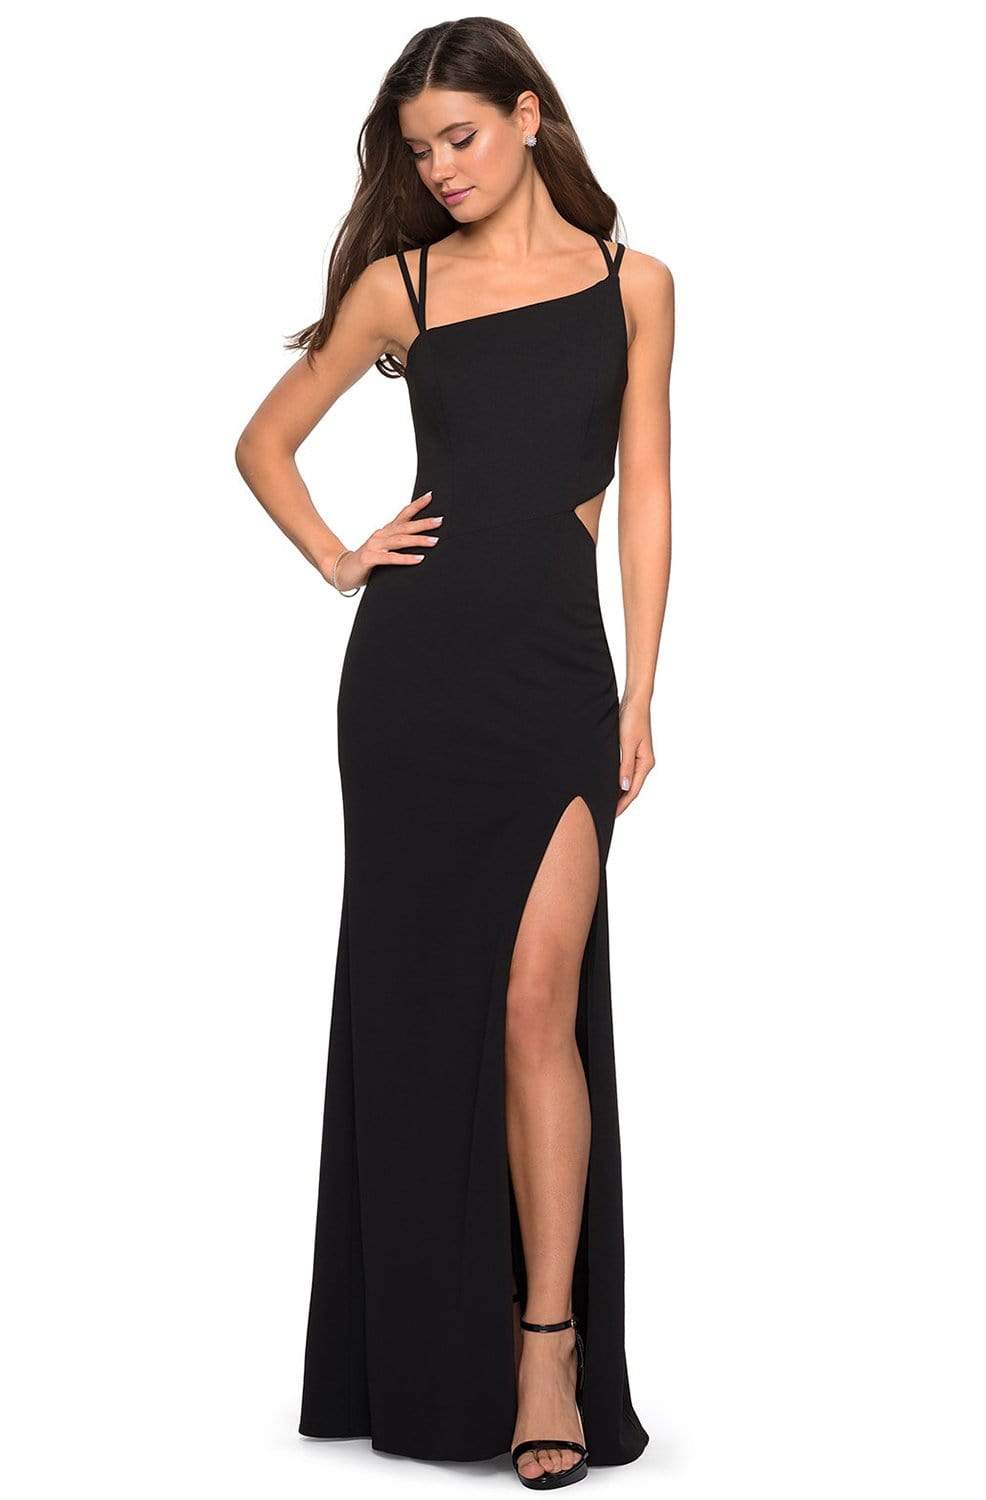 La Femme - 27126 Asymmetrical Neckline Strappy Jersey Evening Dress Evening Dresses 00 / Black